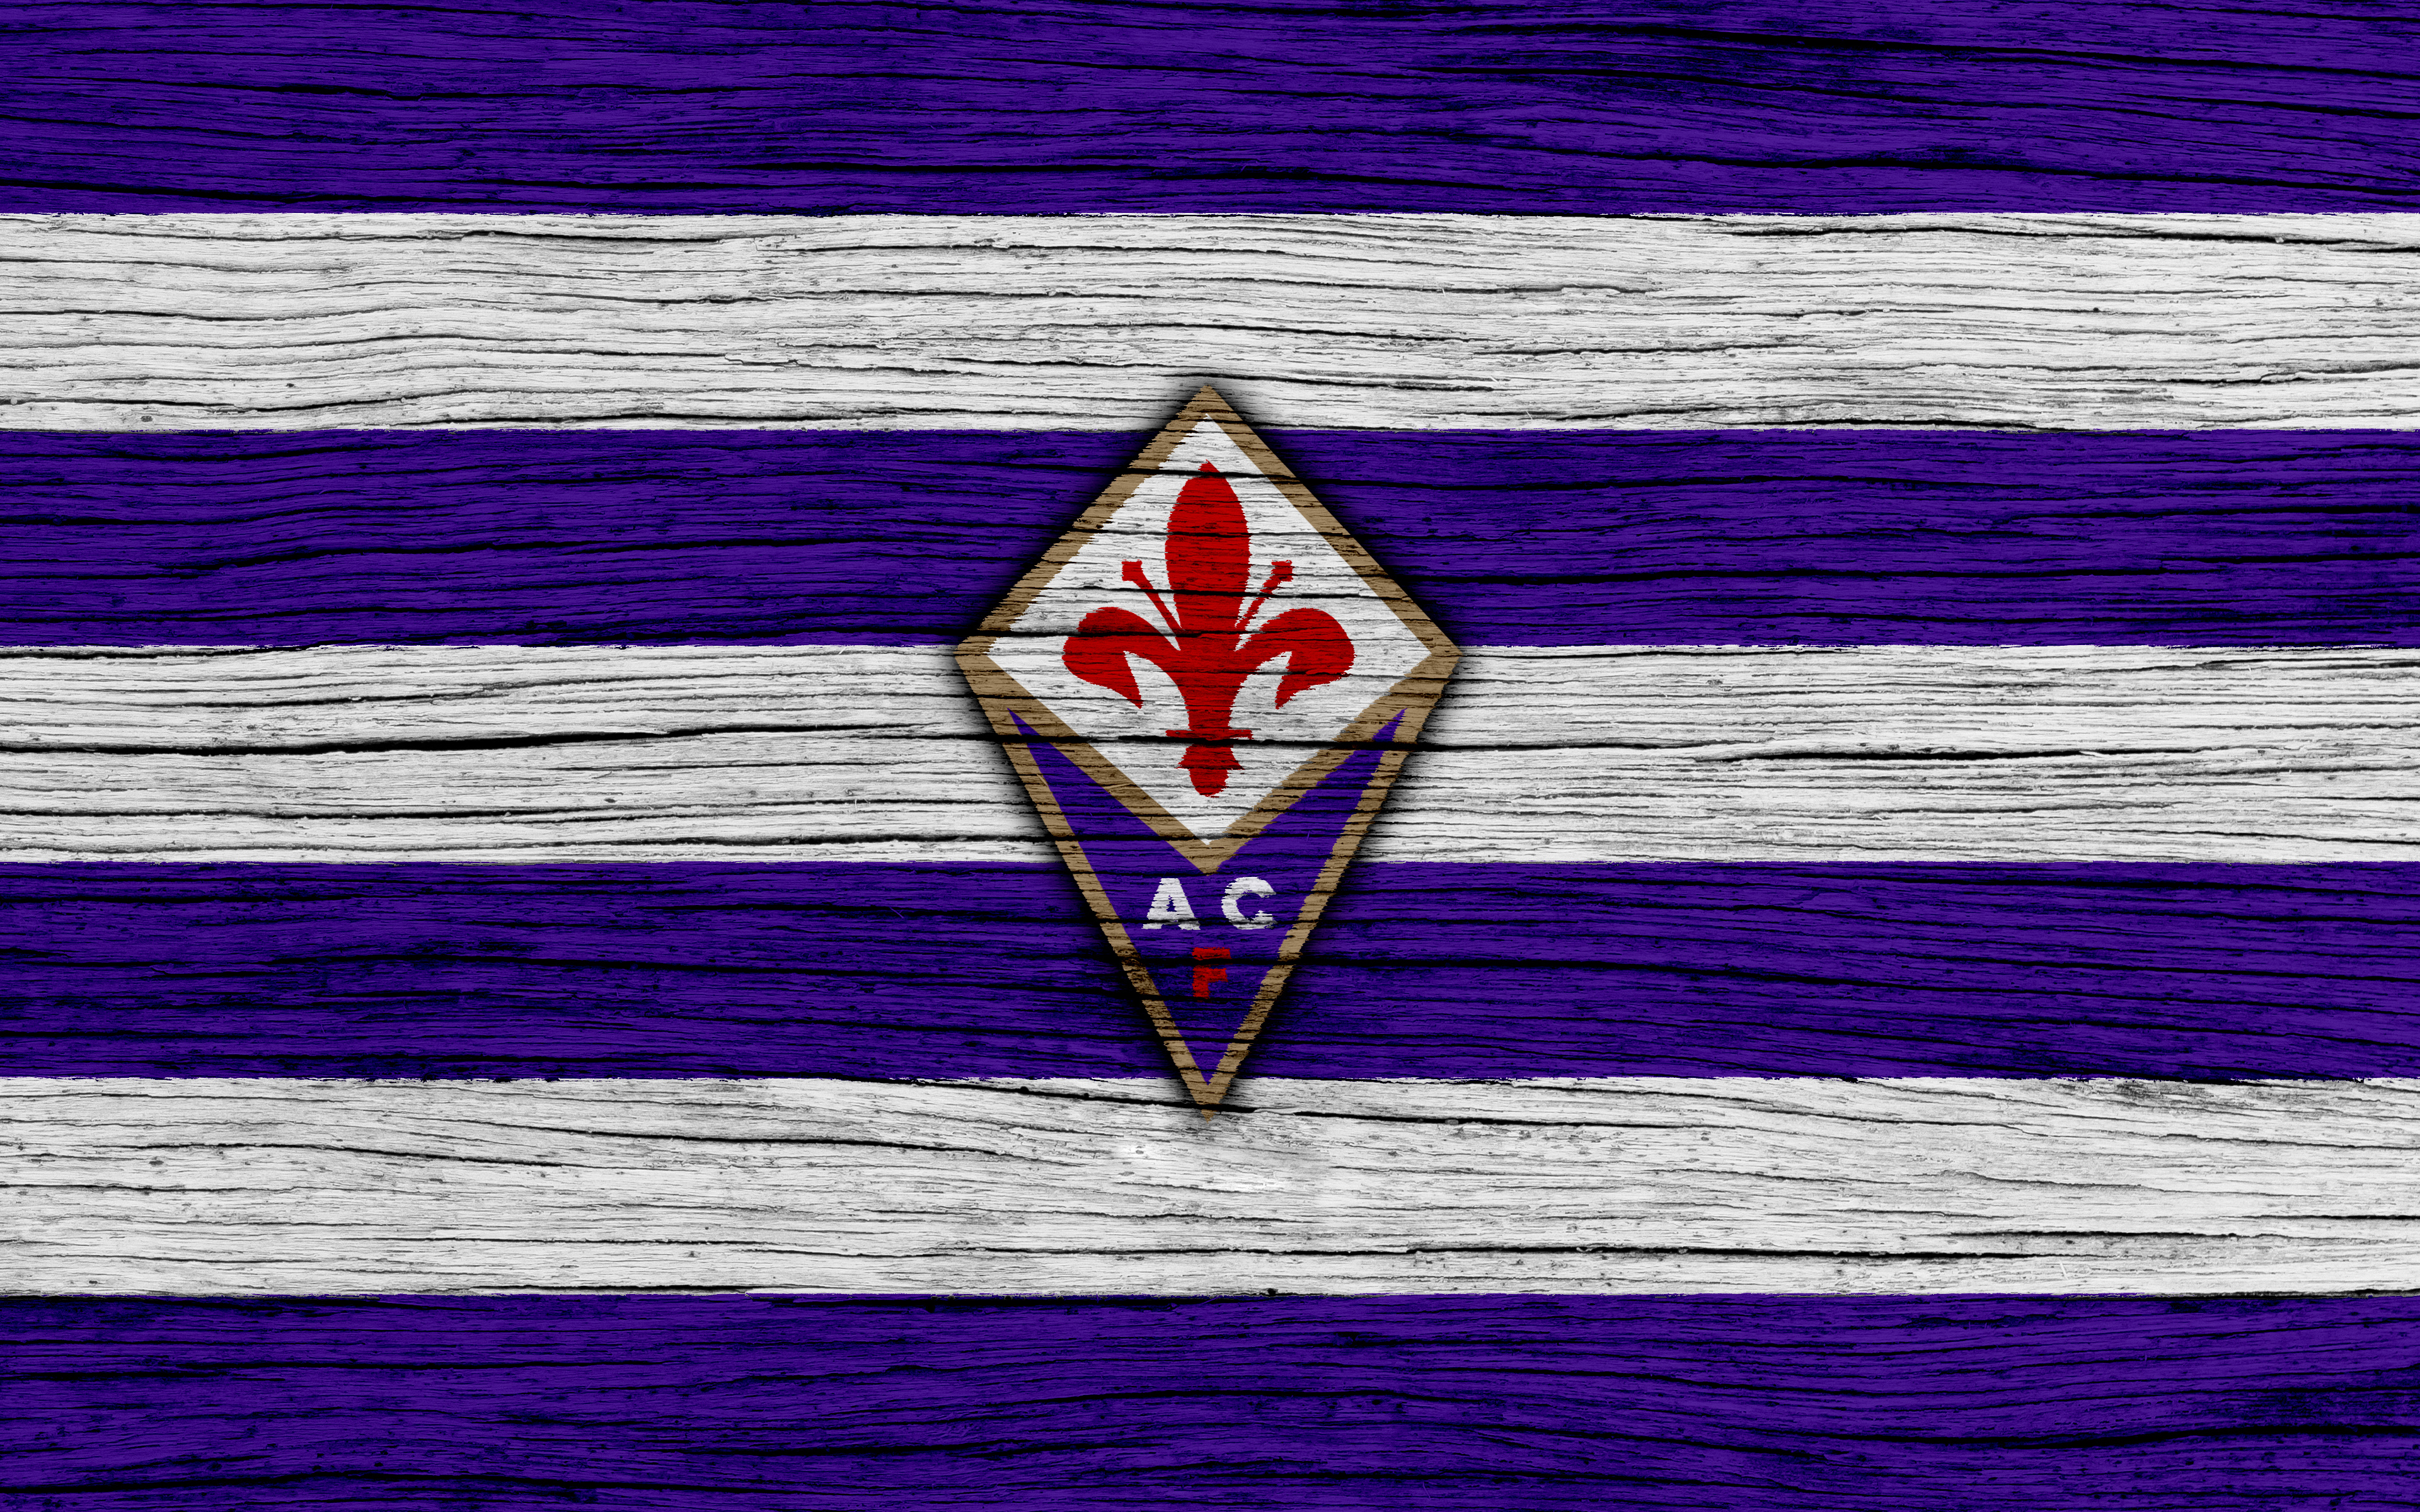 Acf Fiorentina 4k Ultra HD Wallpaper Background Image